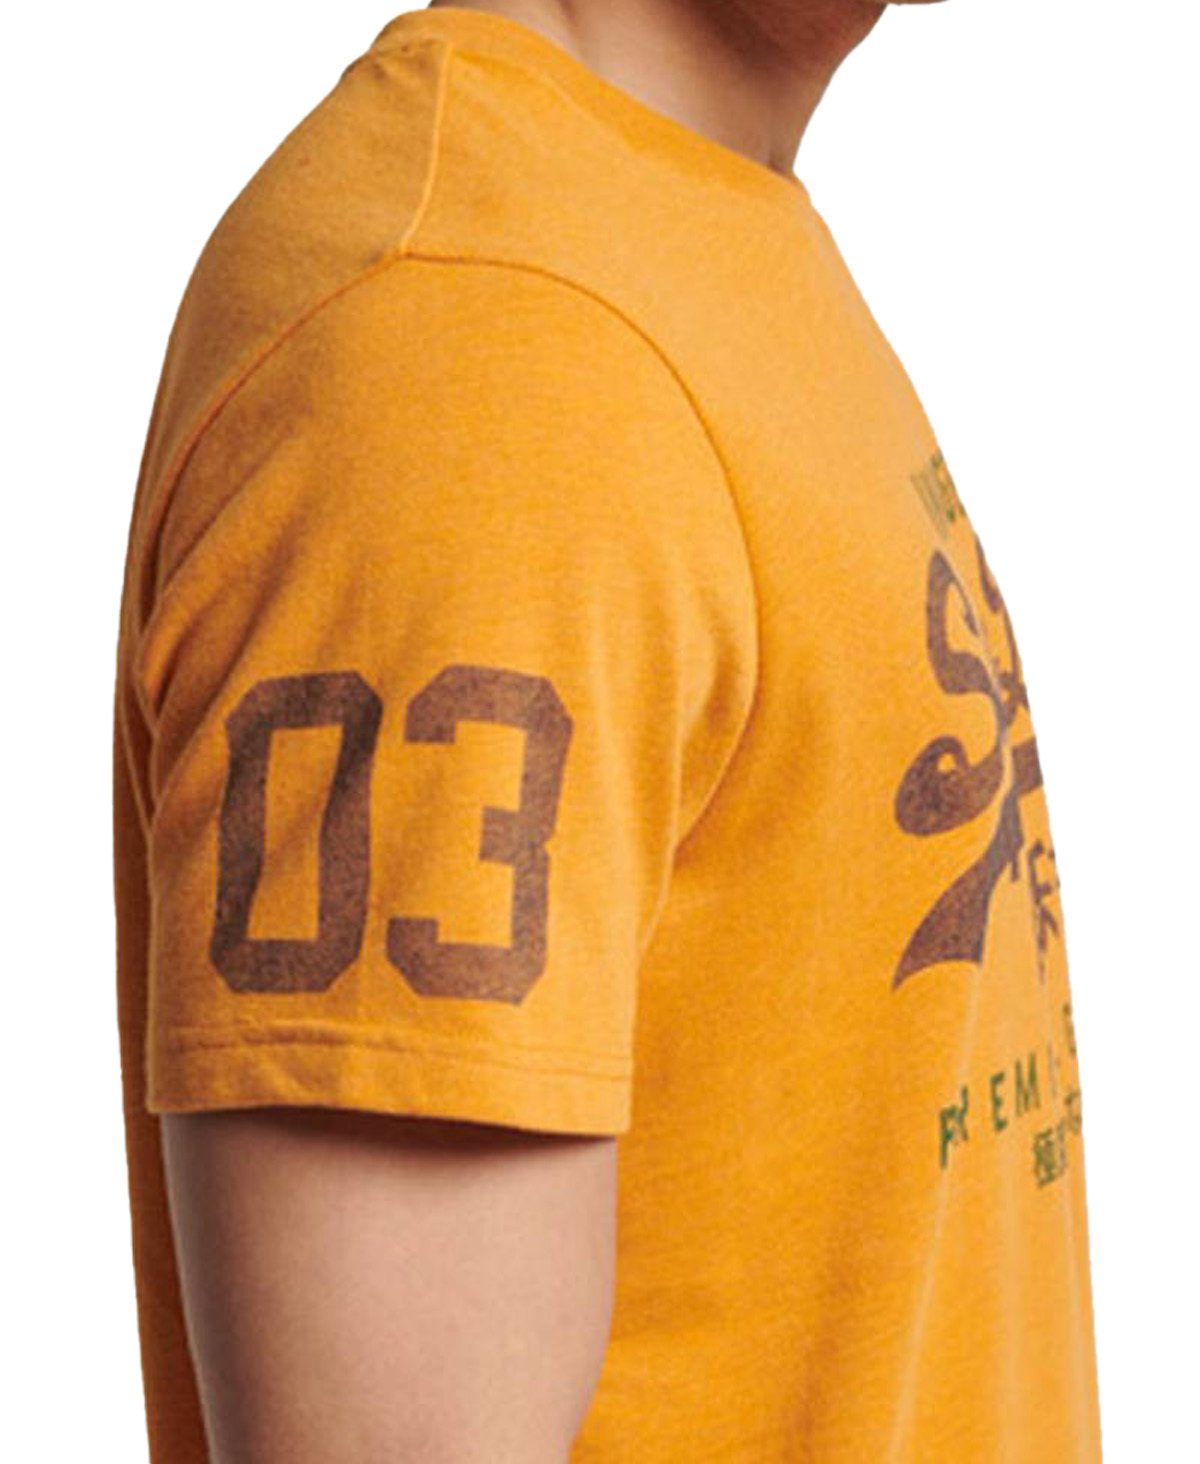 Gelb VINTAGE T-Shirt T-Shirt vL Meliert - Superdry CLASSIC Logo TEE, Herren